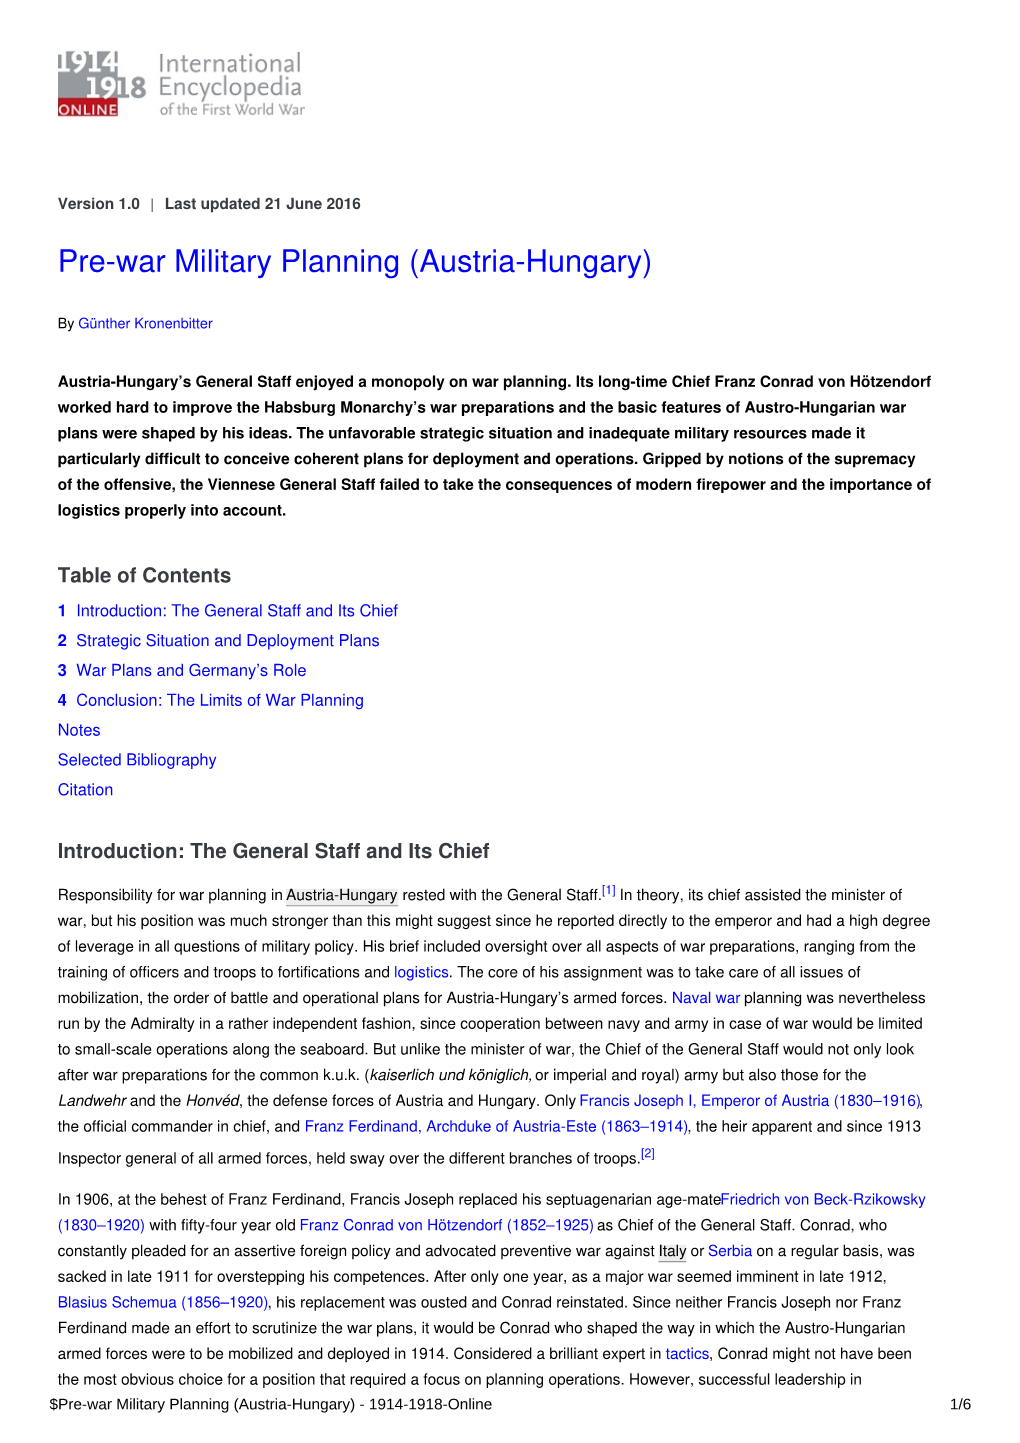 Pre-War Military Planning (Austria-Hungary) | International